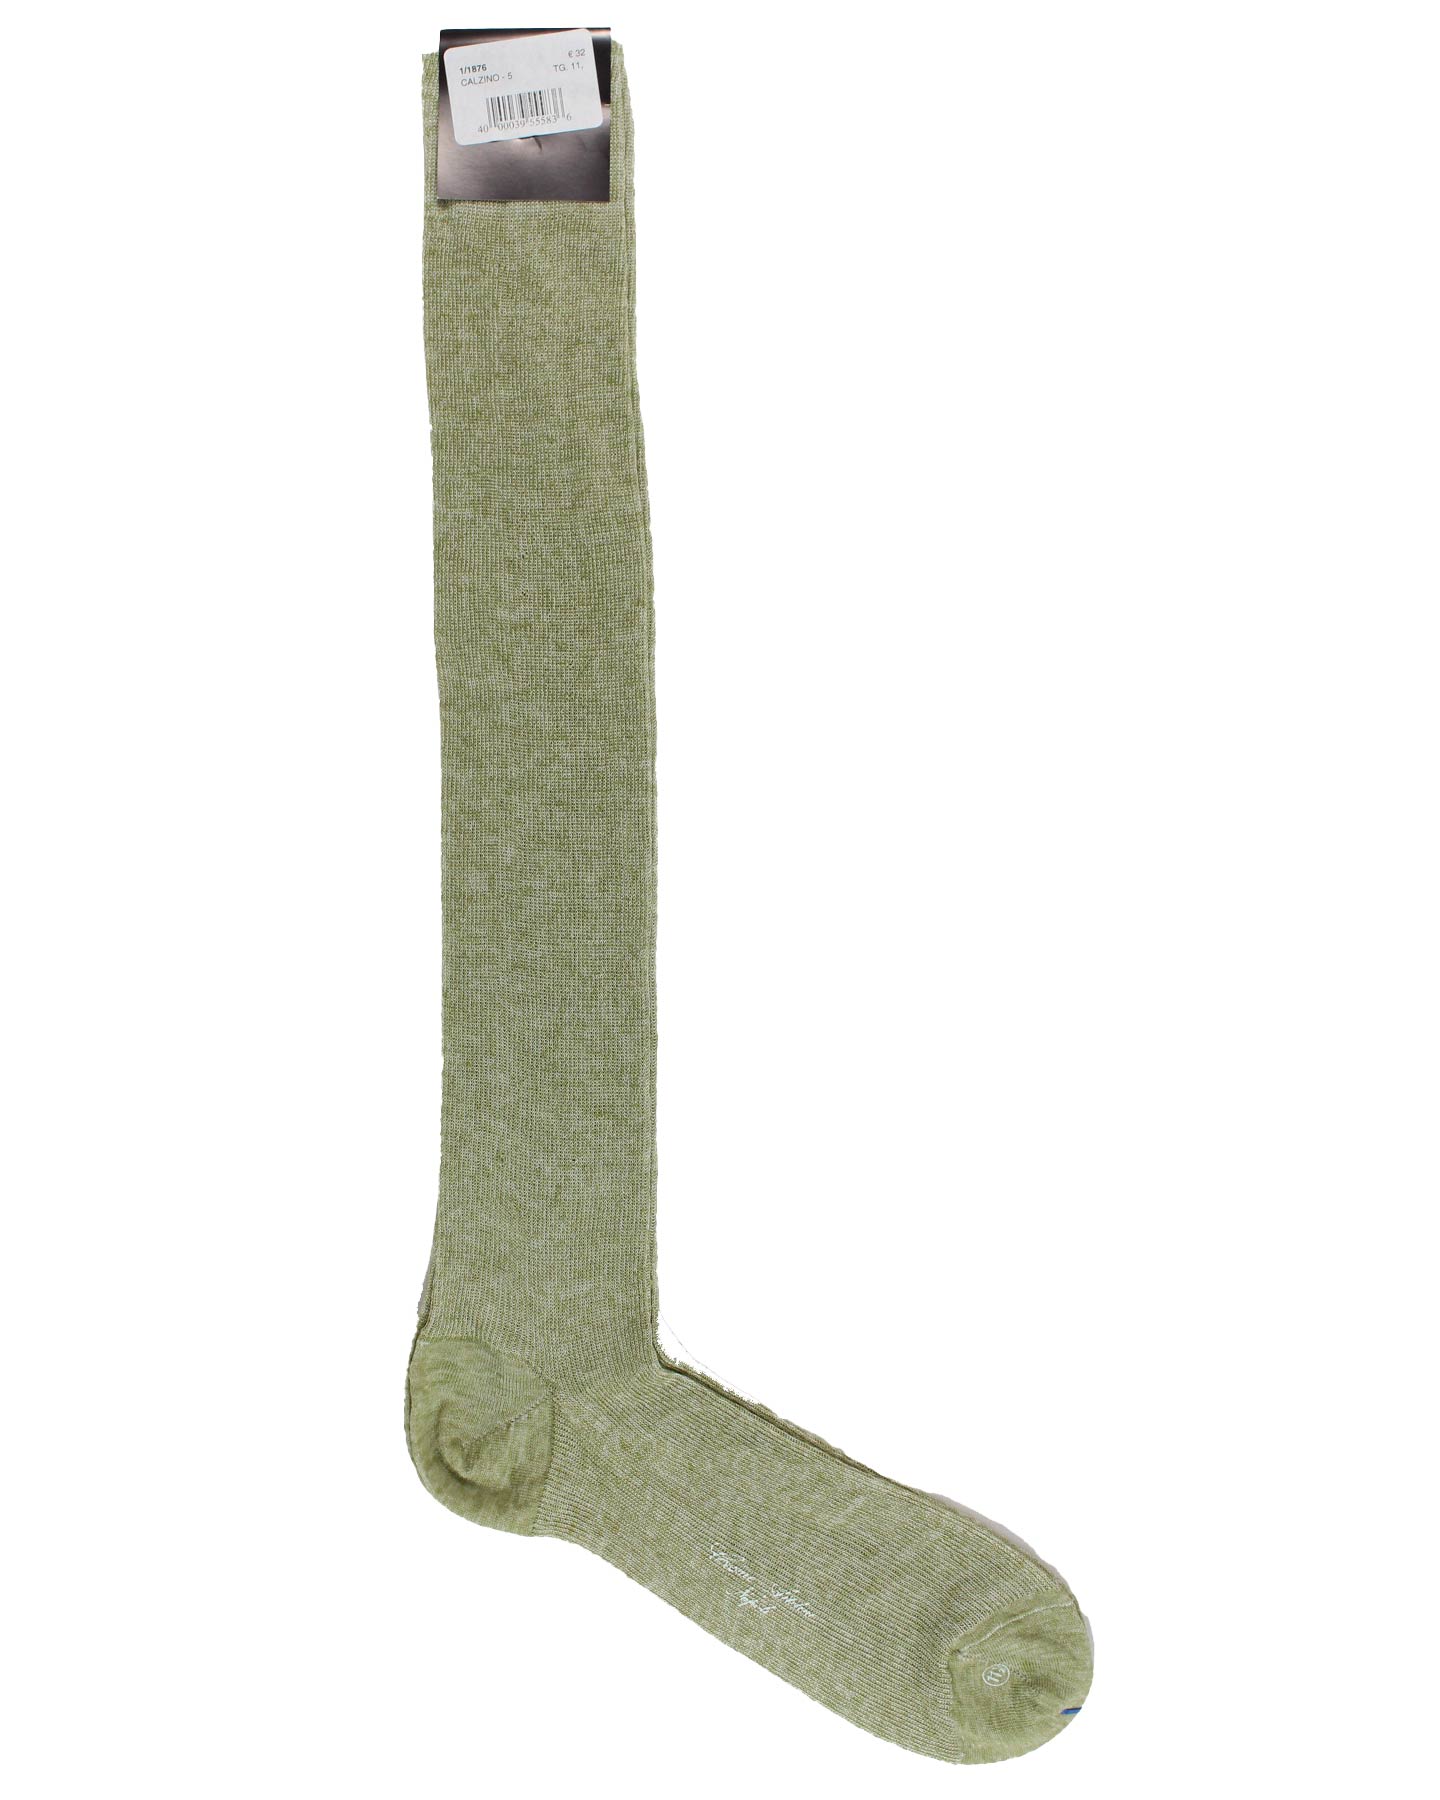 Cesare Attolini Light Green Over The Calf Socks Linen Cotton US 11 1/2 - EUR 45 SALE